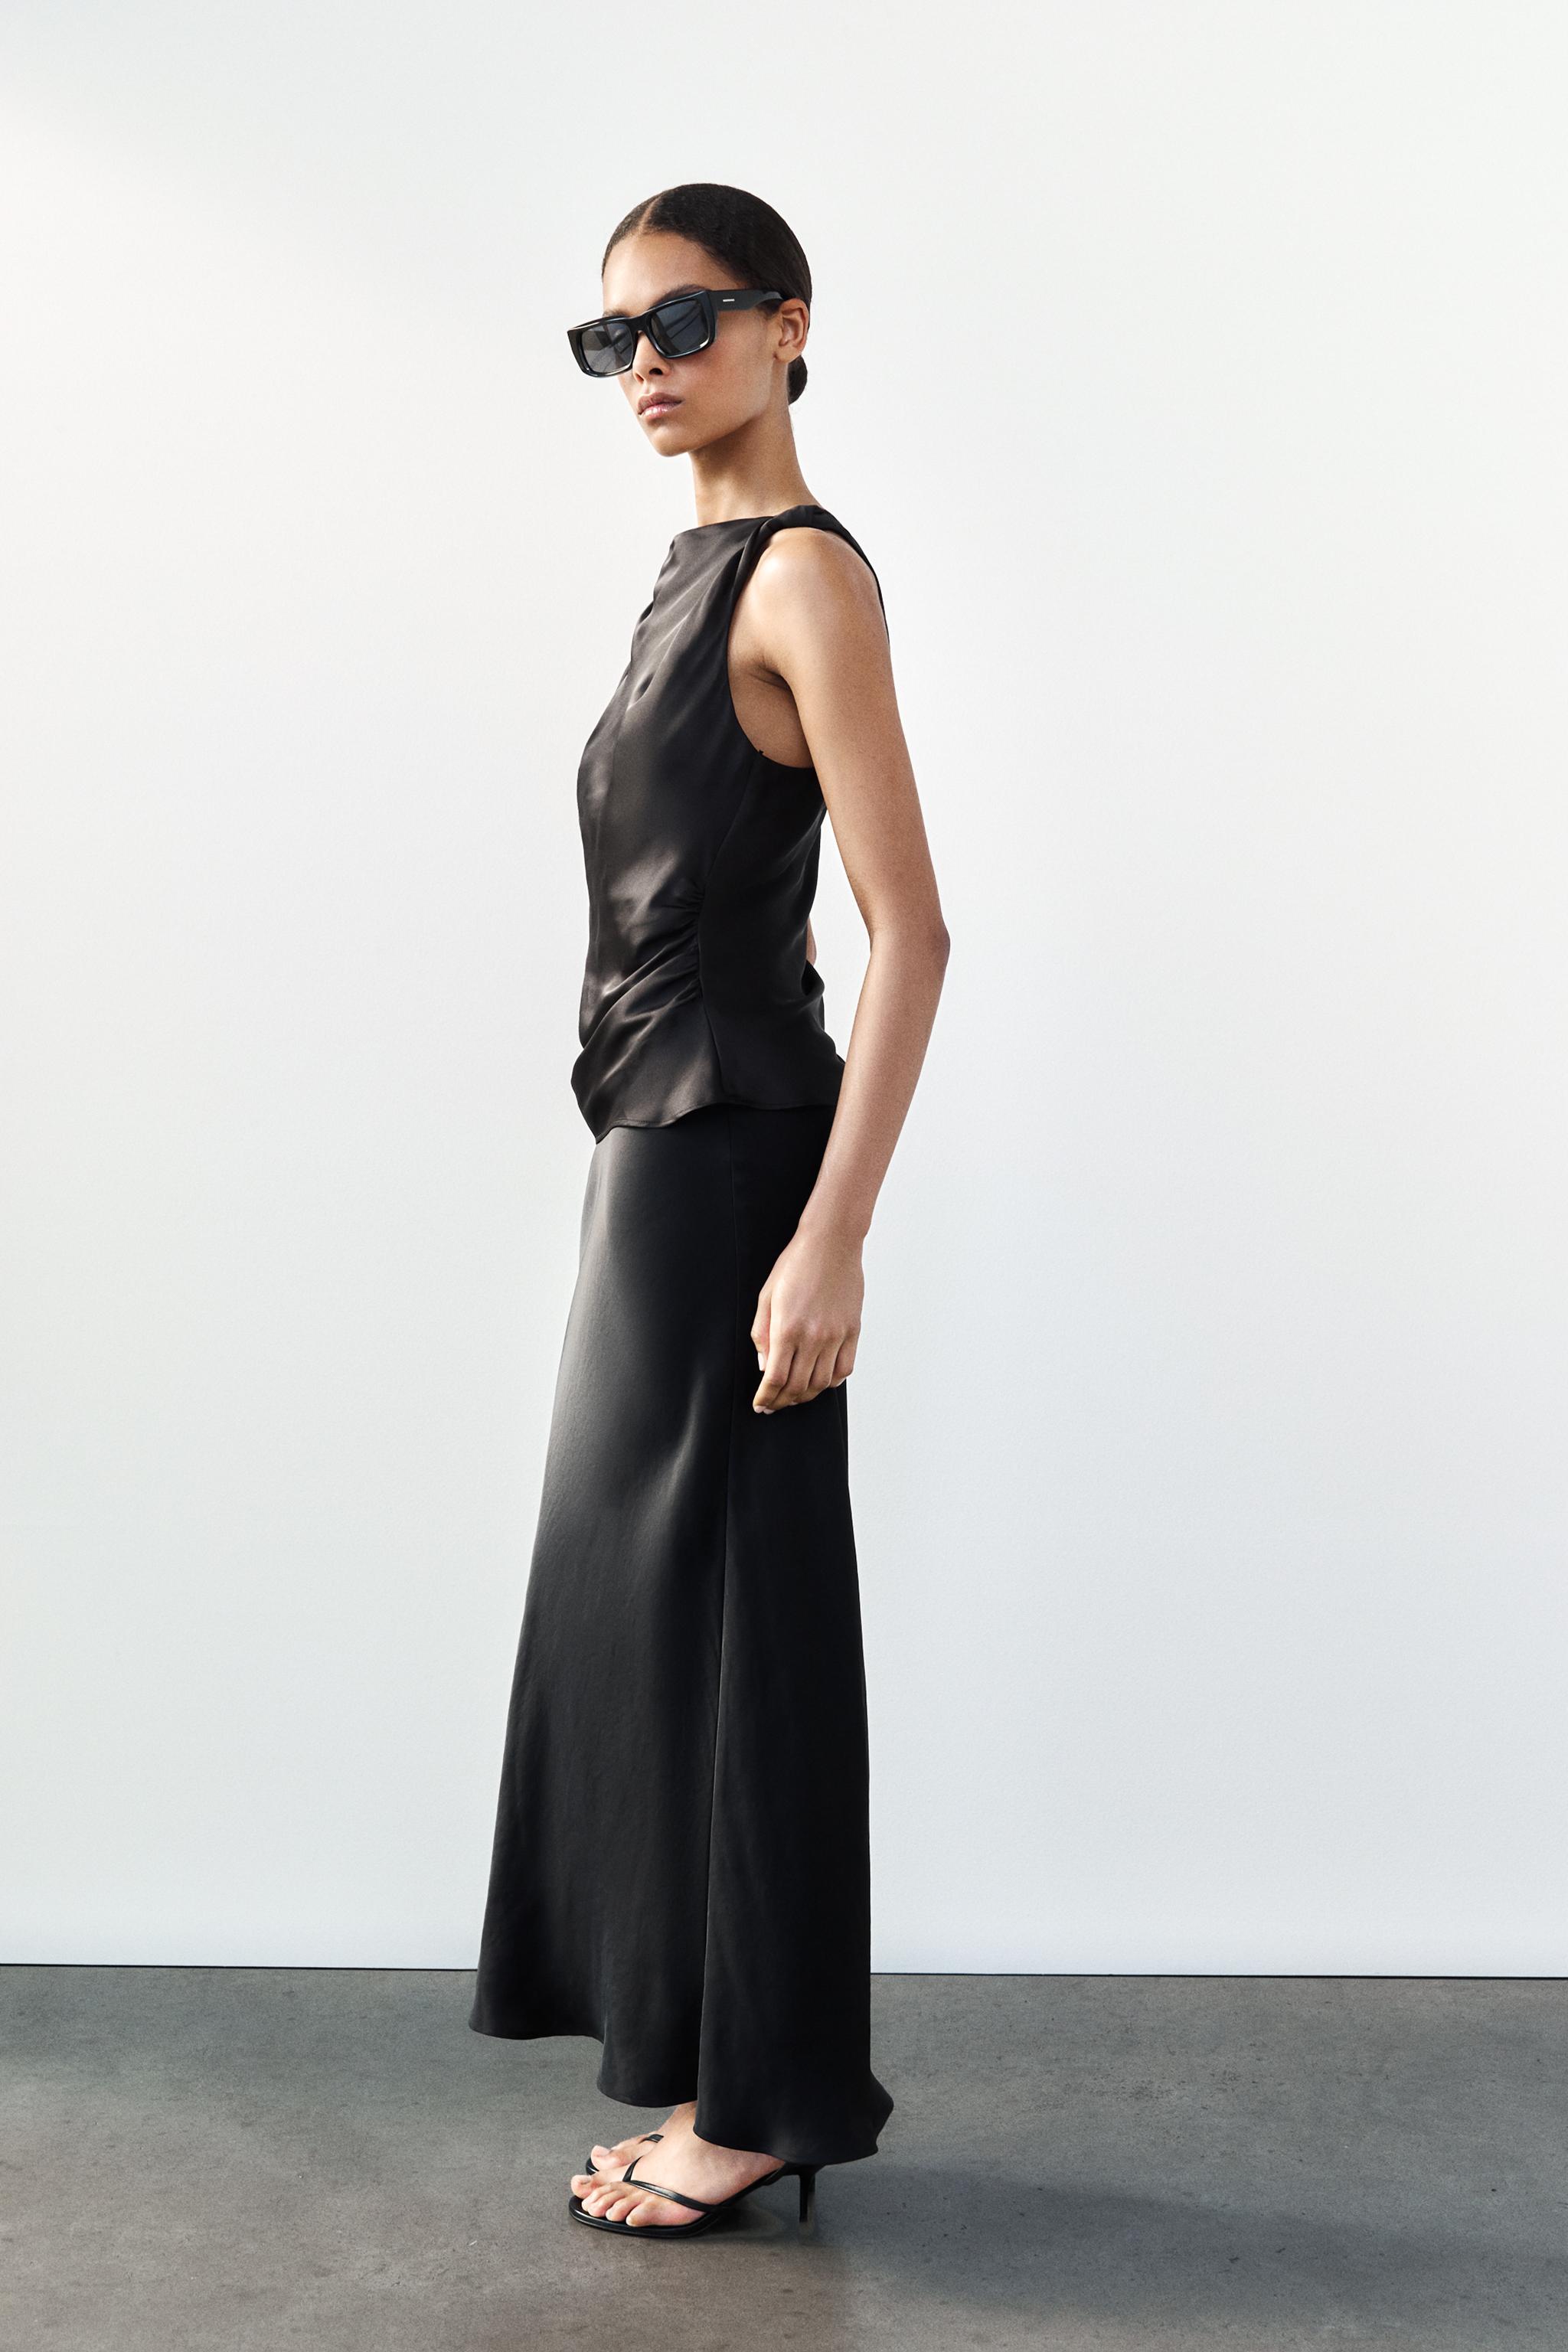 New Zara Satin Effect Corset Black Dress 0387/206 XS Small Medium Bloggers  Fav